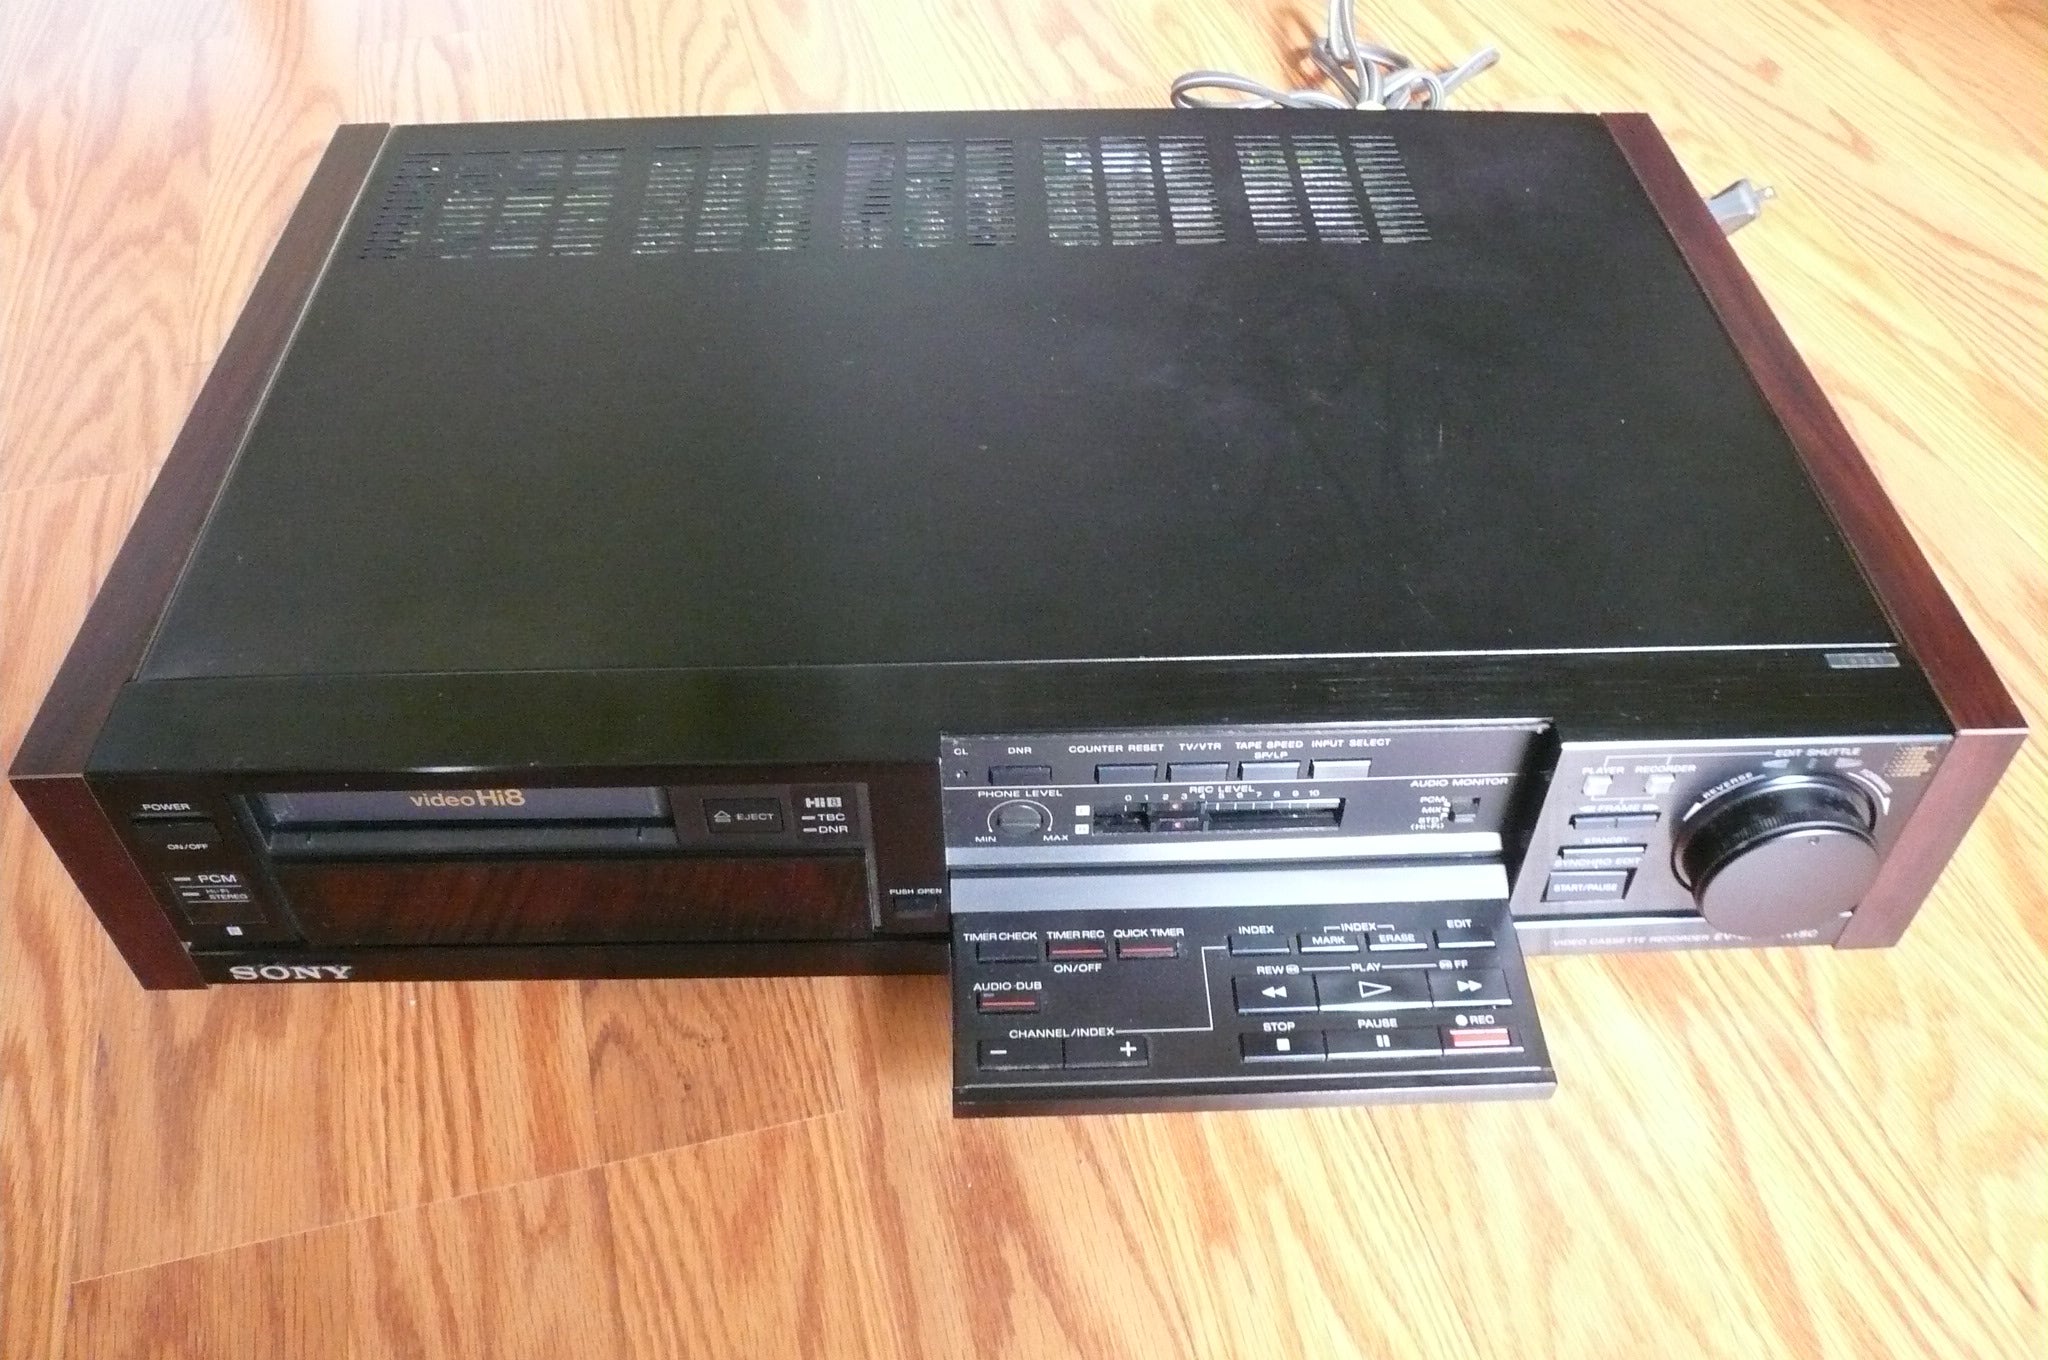 Sony EV-S3000 Hi8 stereo NTSC analog VCR plays 8mm Hi8 analog 